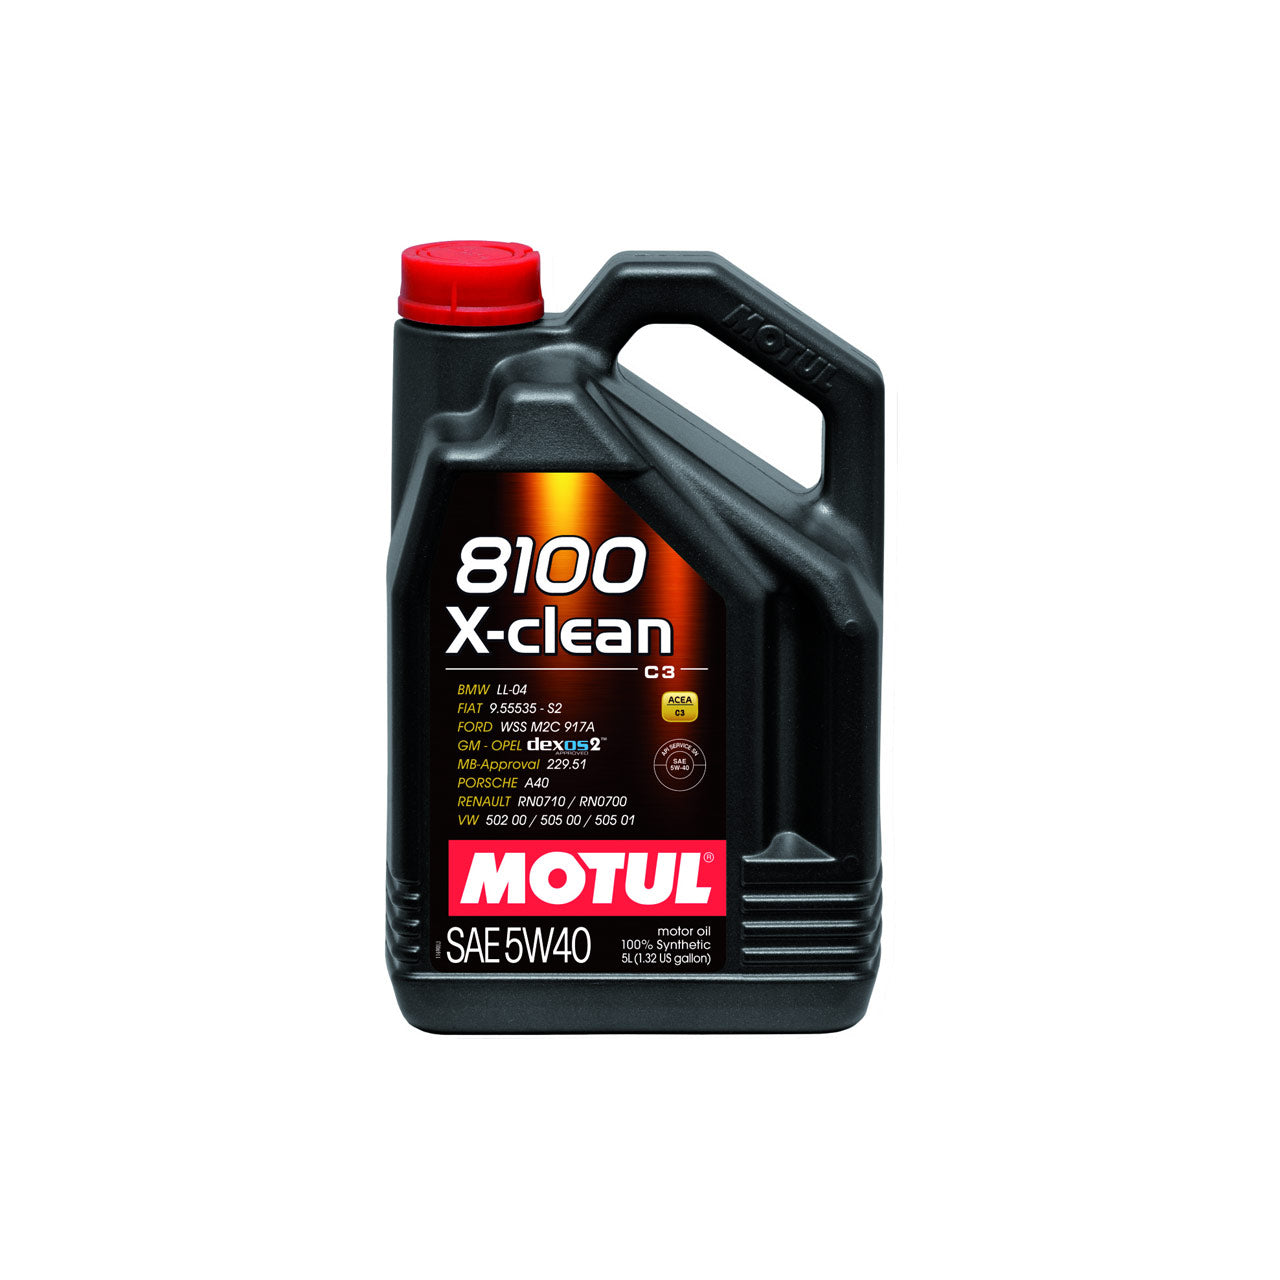 Motul 8100 X-Clean 5w-40 Fully Synthetic Car Engine Oil 5l 102051